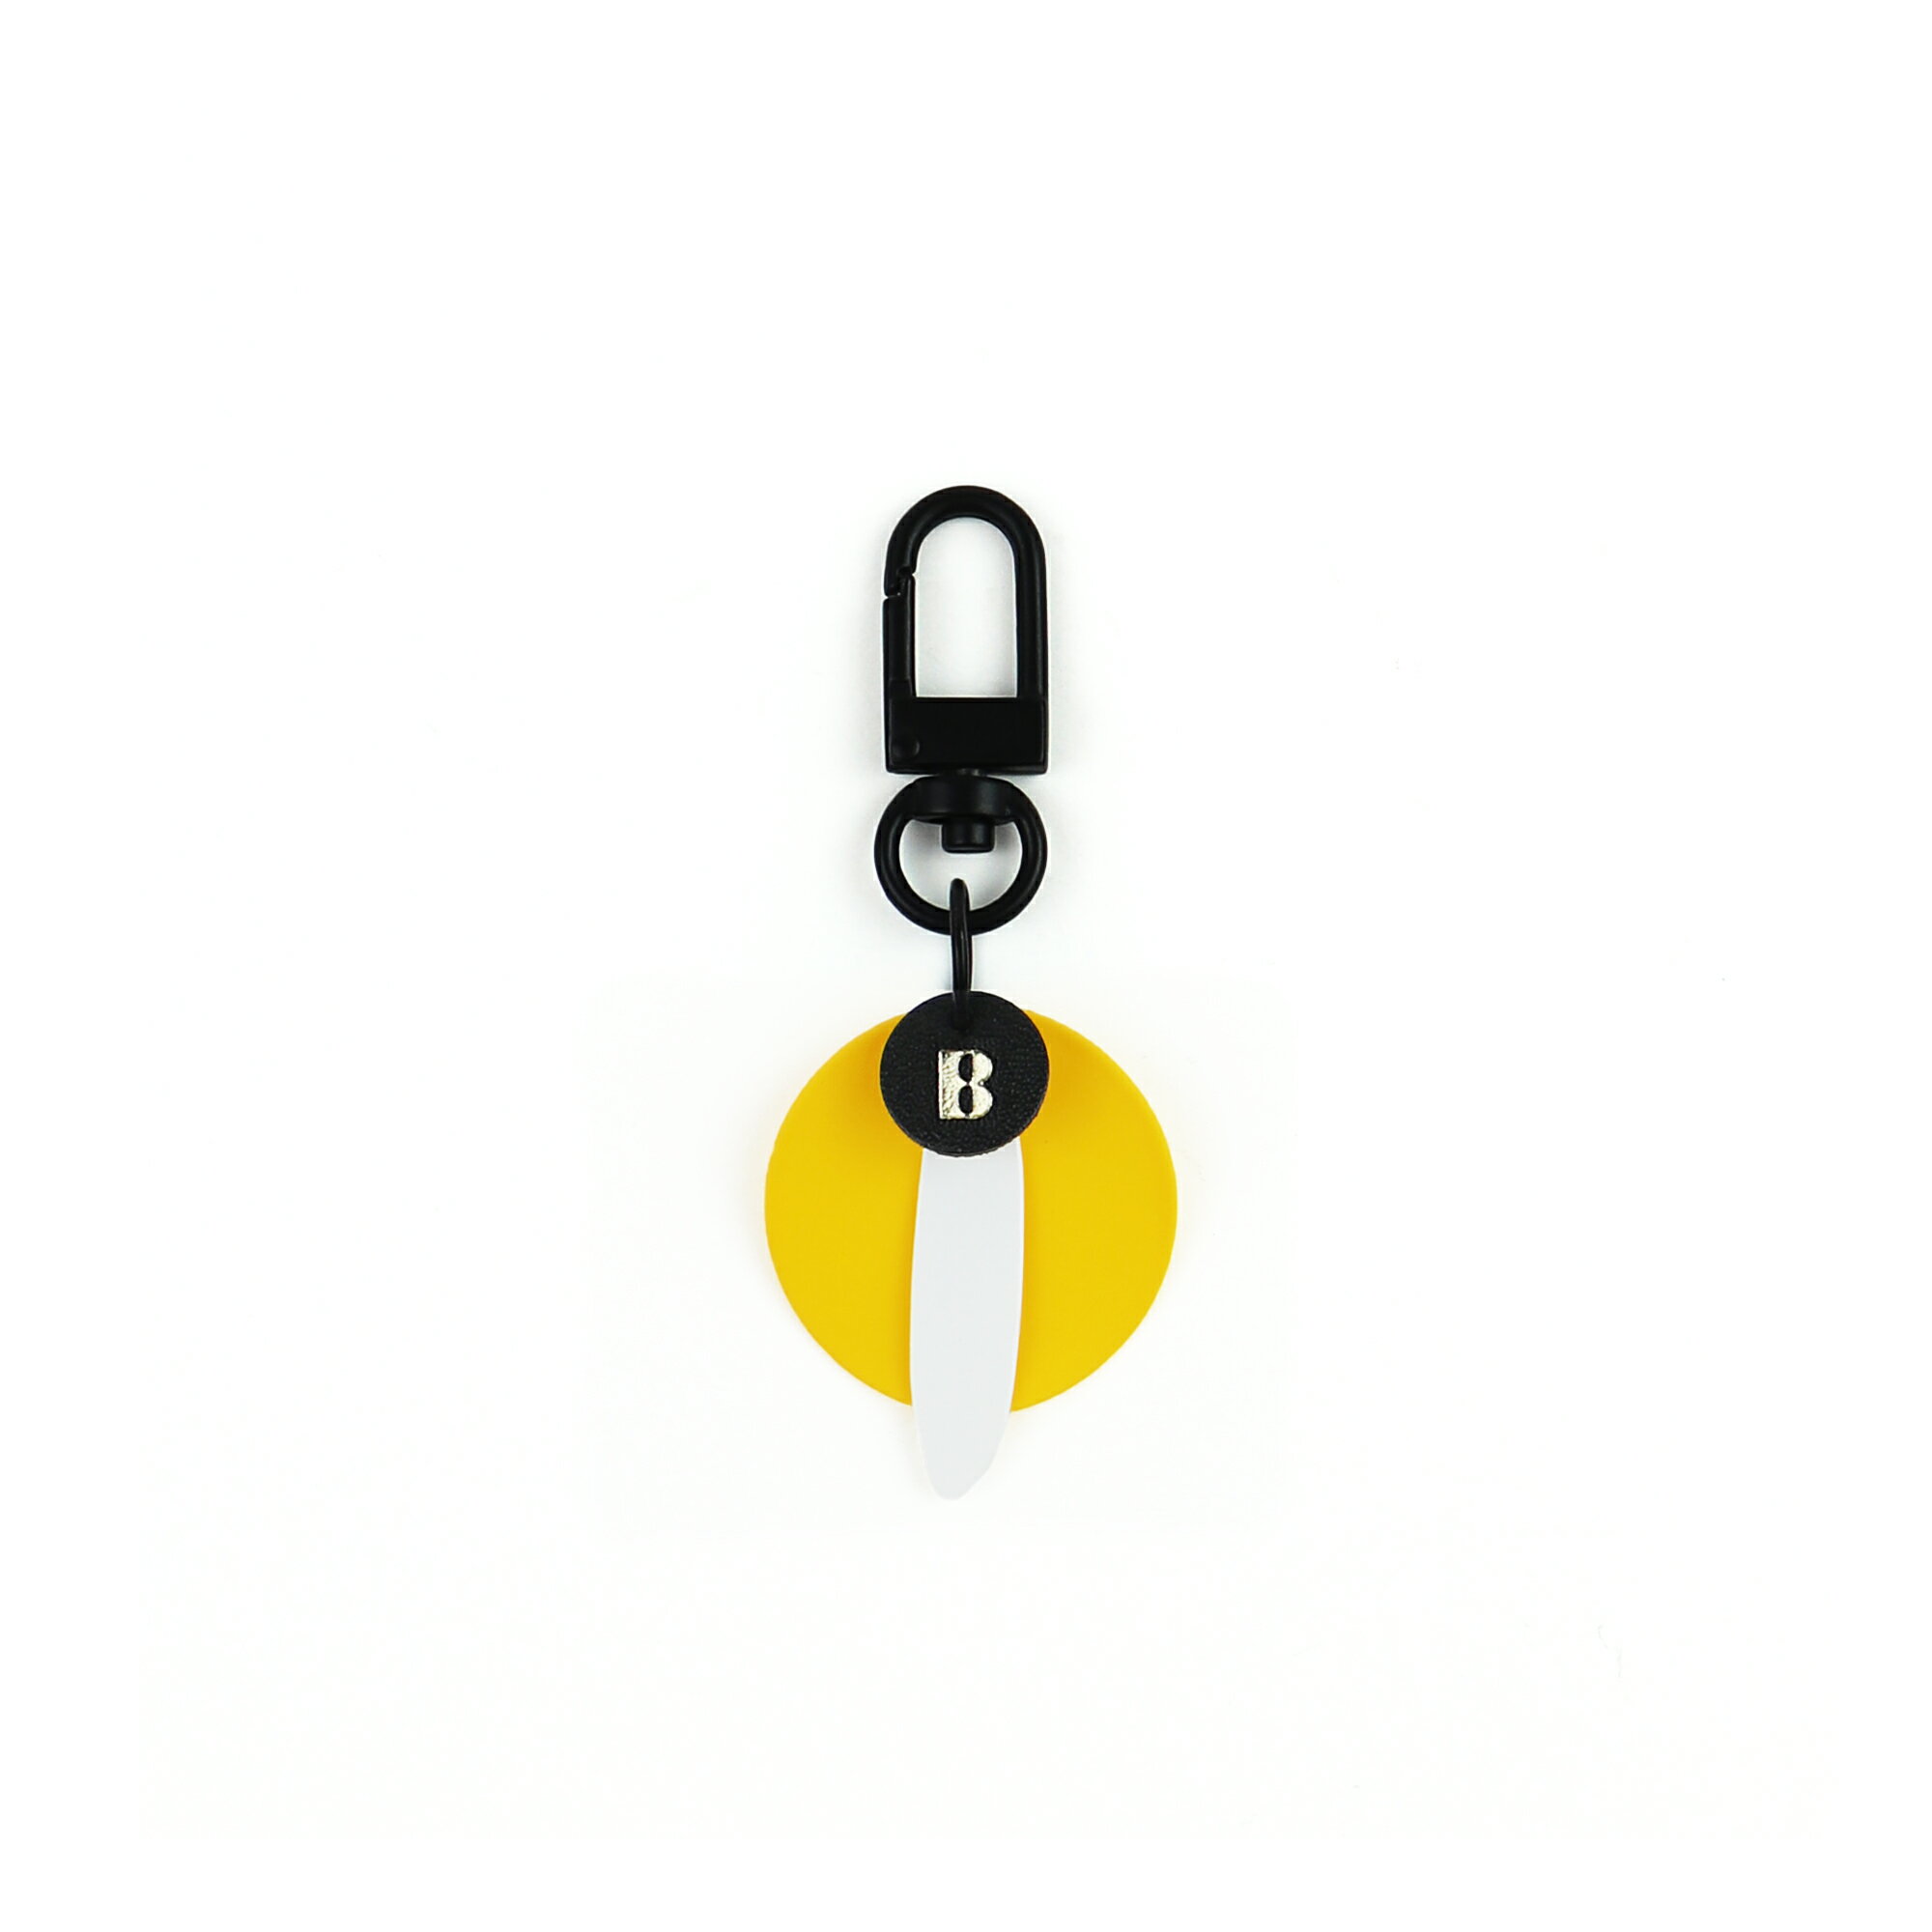 yL[z_[z8.Yellow moon key ring L[z_[@ Xgbv@obN`[@jp@ v[g j